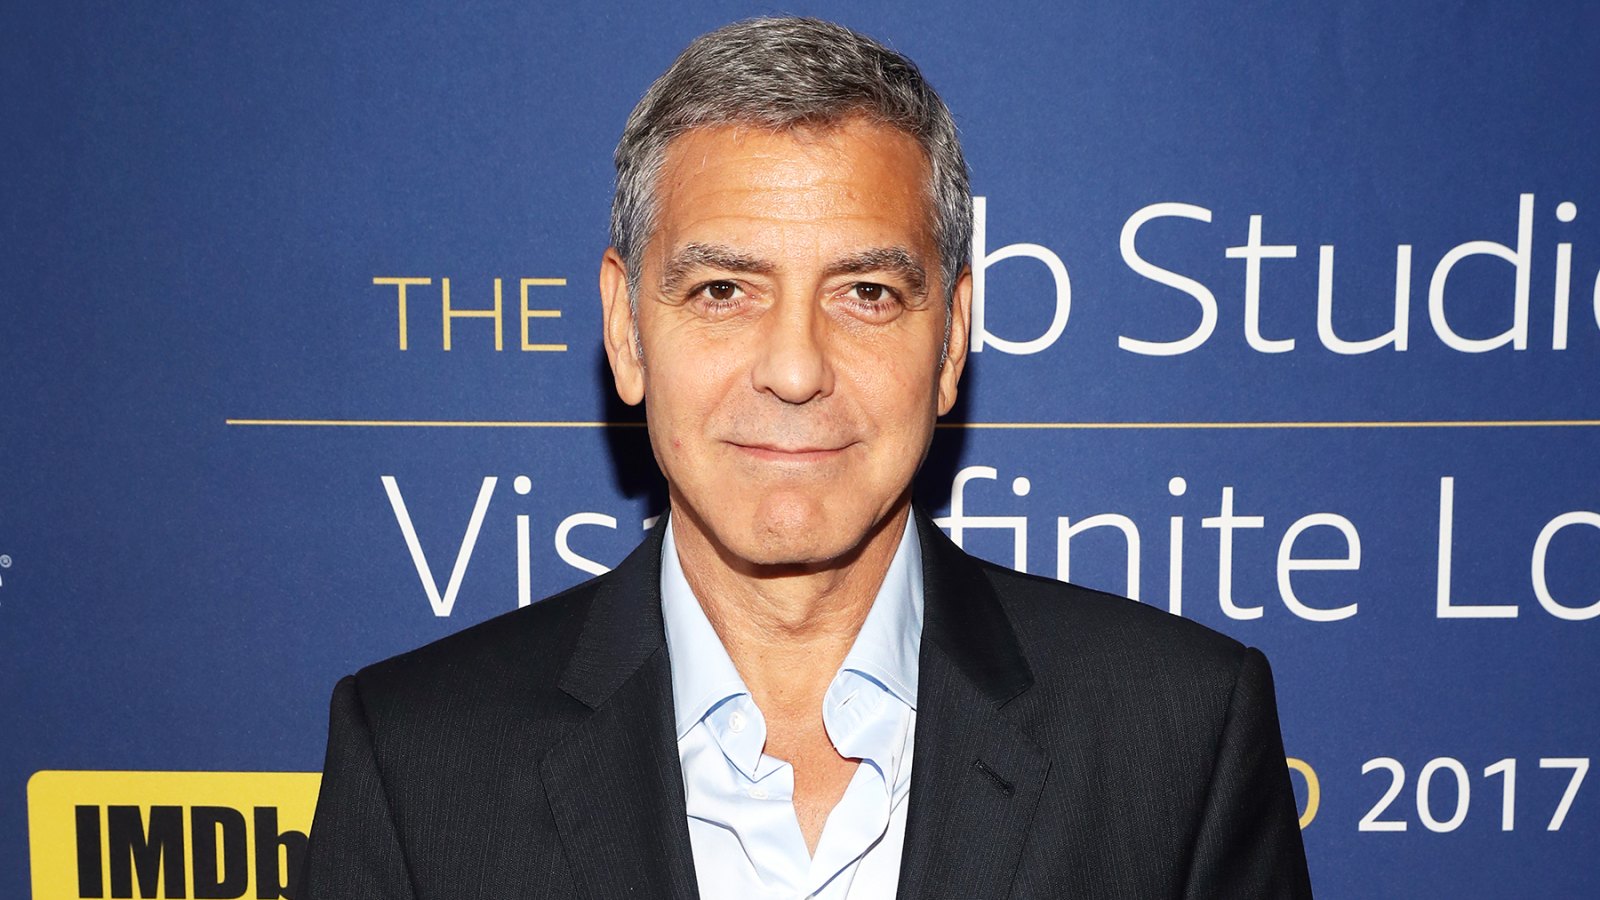 George Clooney Praises Parkland Students in Open Letter